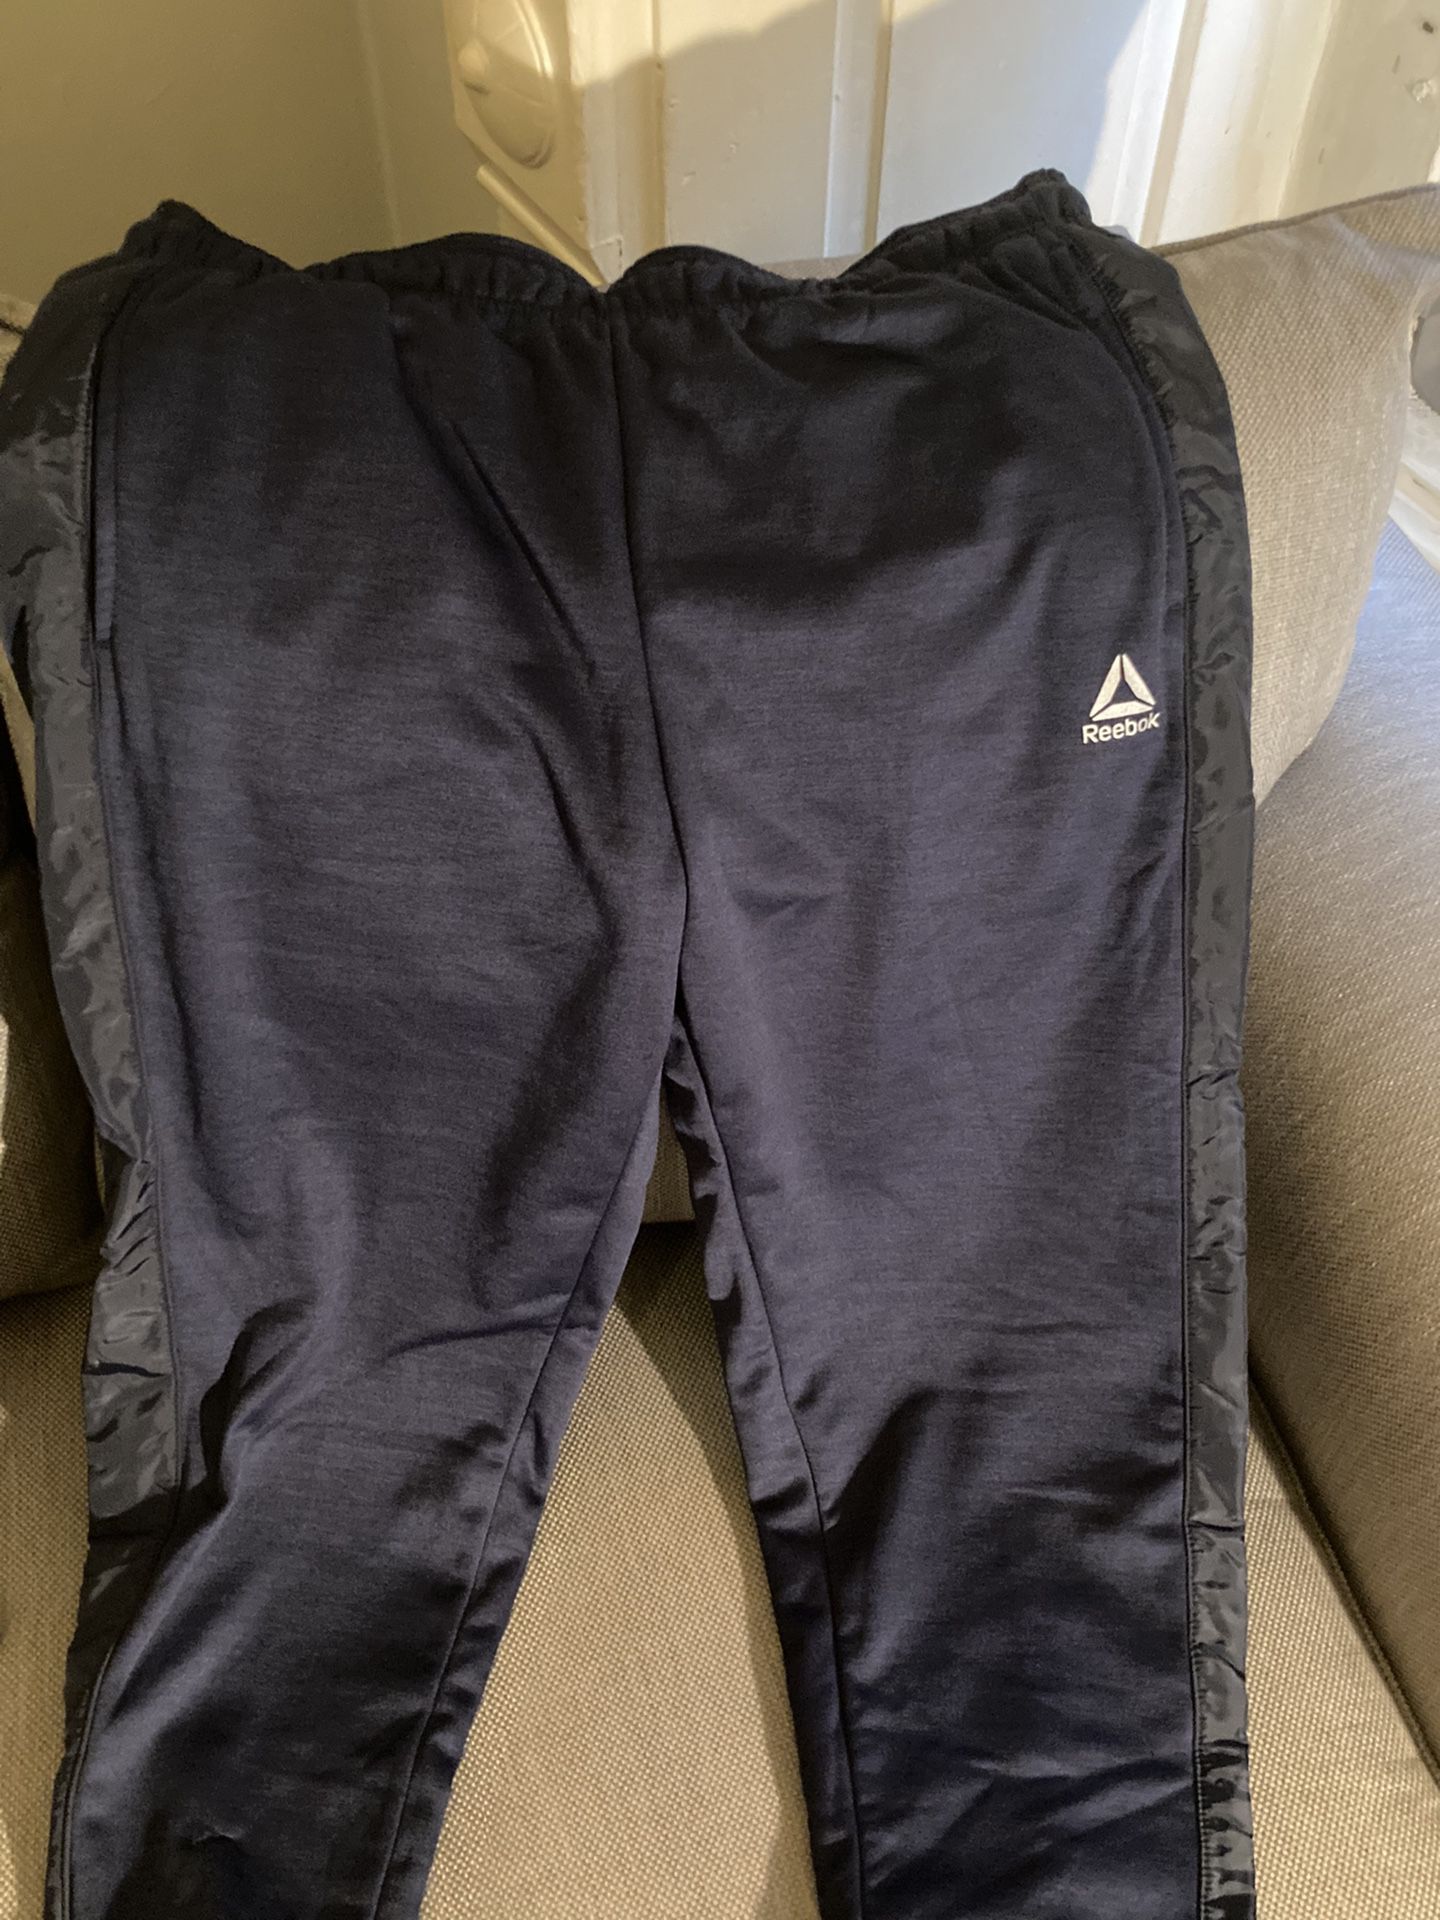 Reebok Jogger Pants Very Comfortable Size XL Brand New